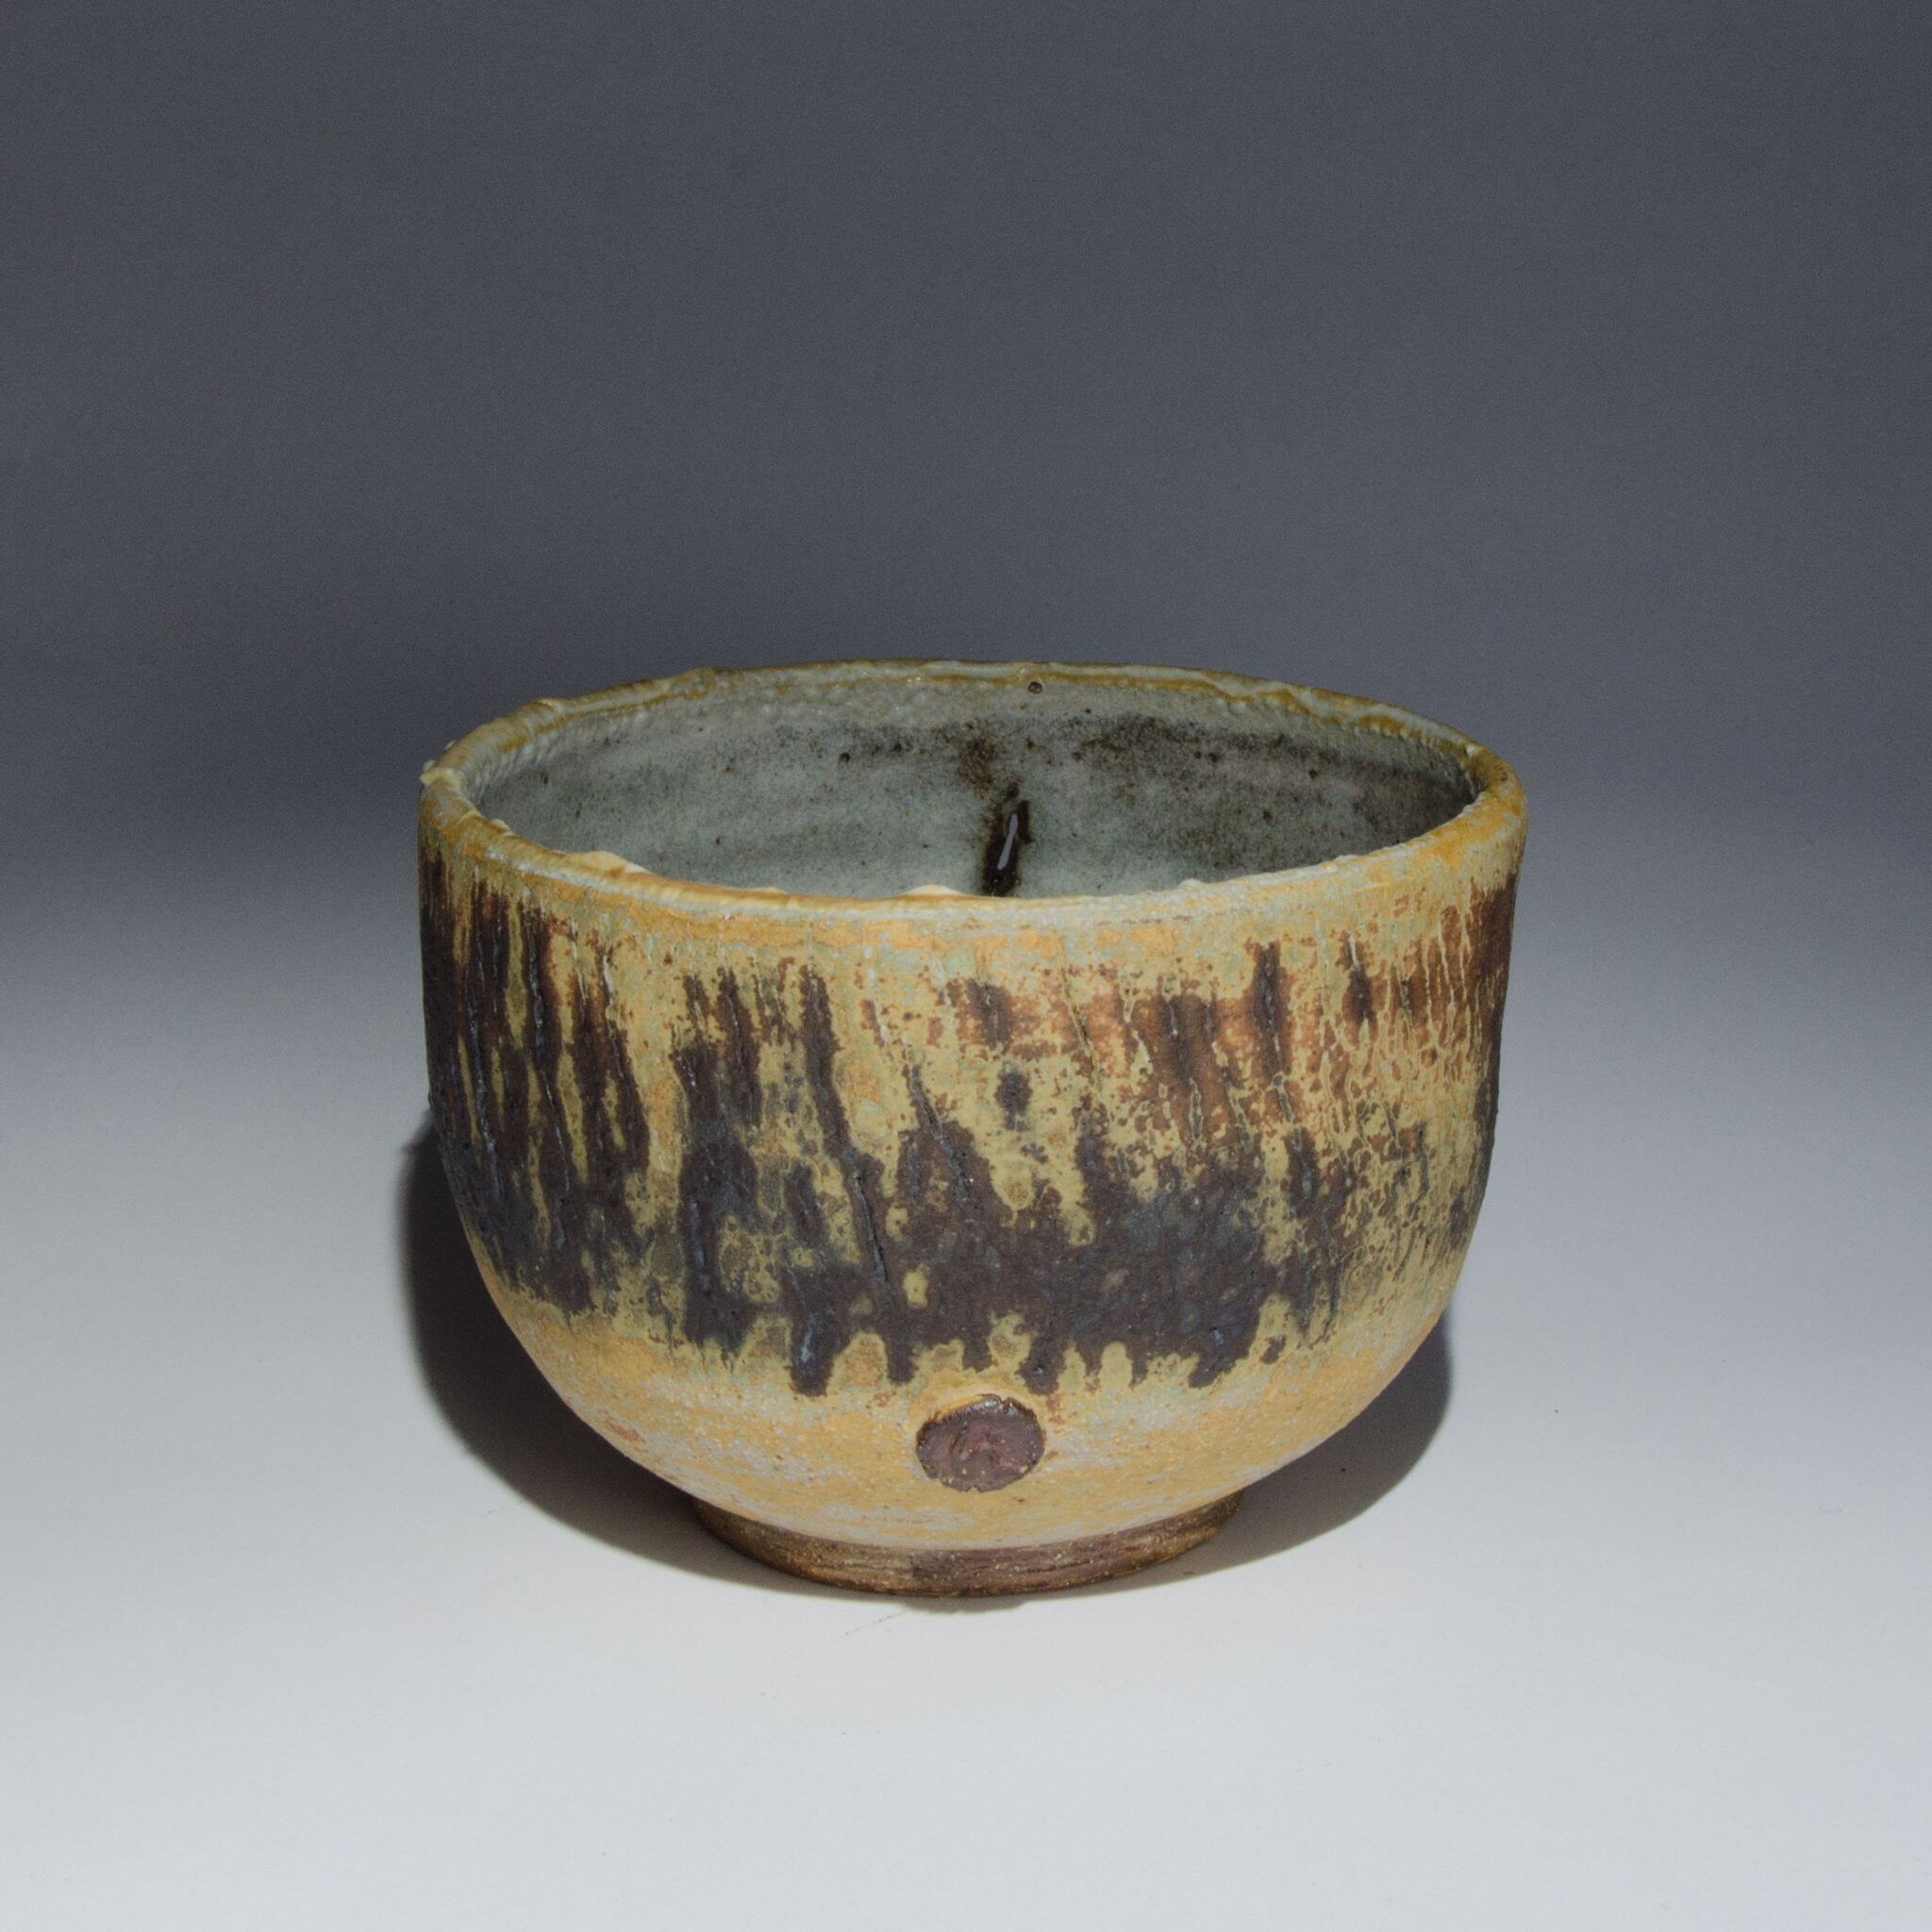 Driftwood bowl with woodash glaze